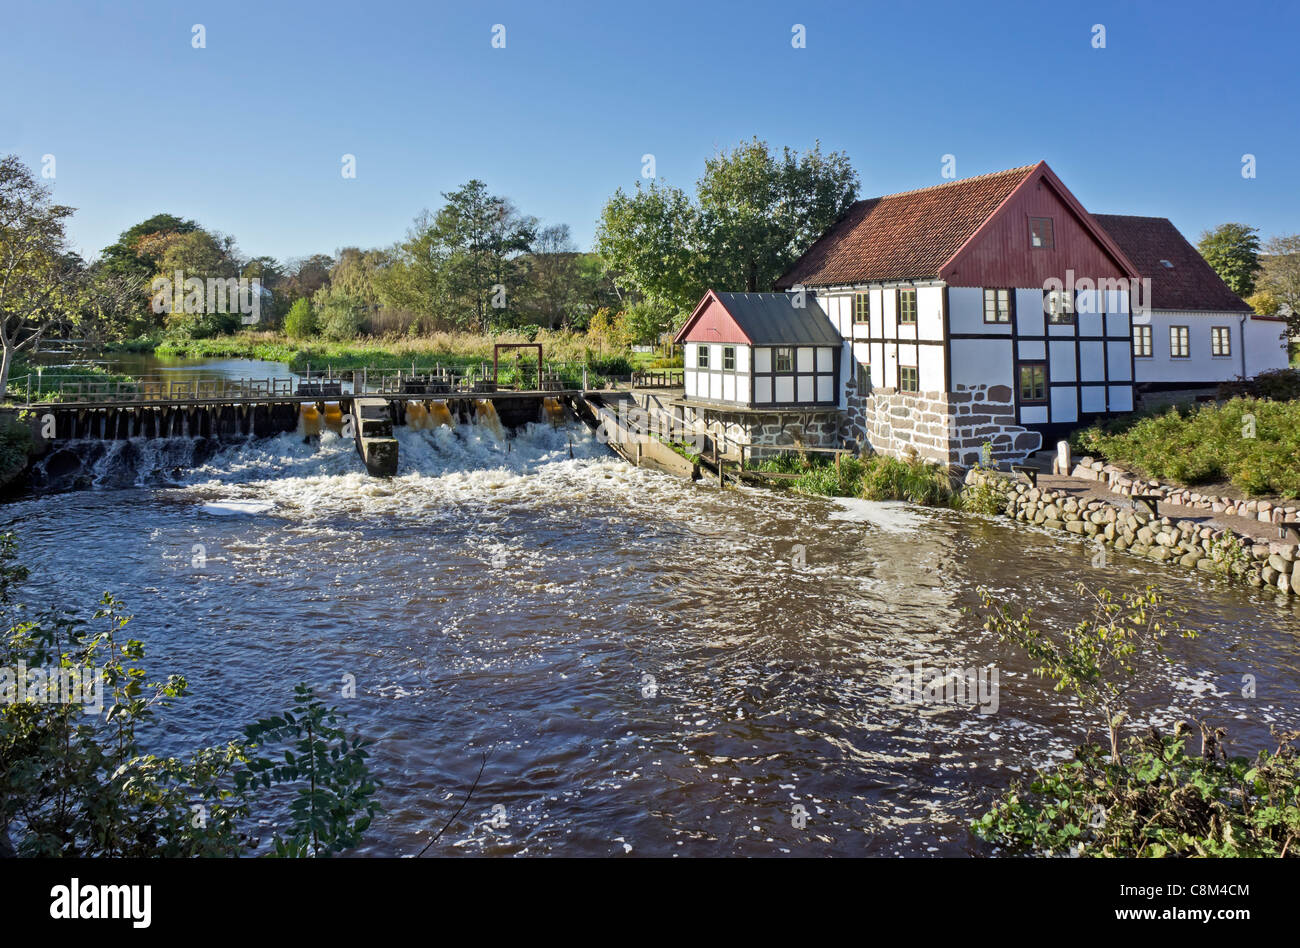 Vandmølle sæby (moulin à eau) sur Glamsbjerg Å (rivière) dans le Jutland Danemark Sæby Banque D'Images